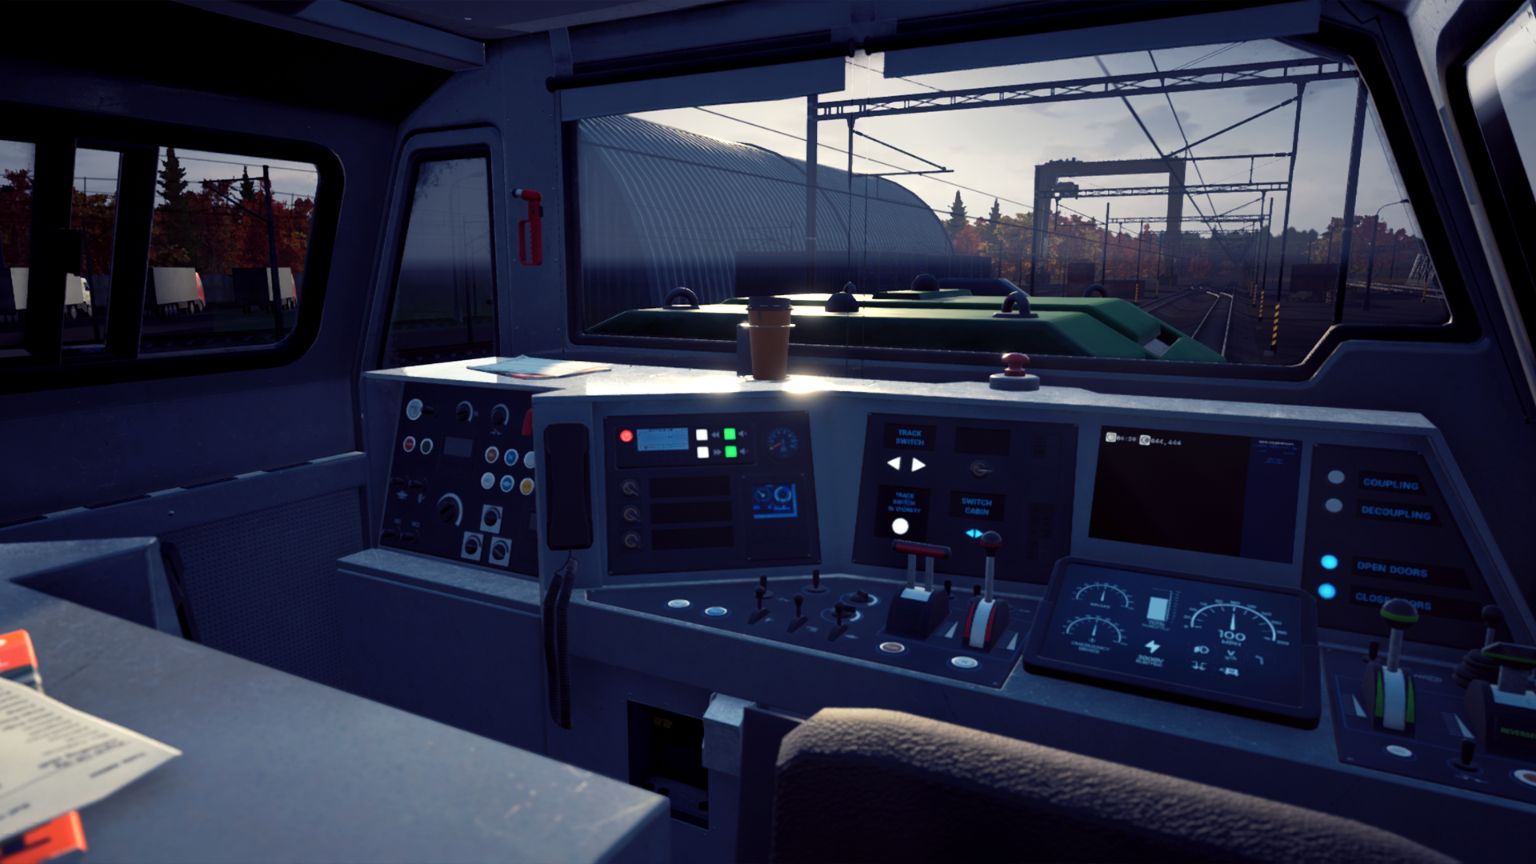 PS5 Train Life - A Railway Simulator